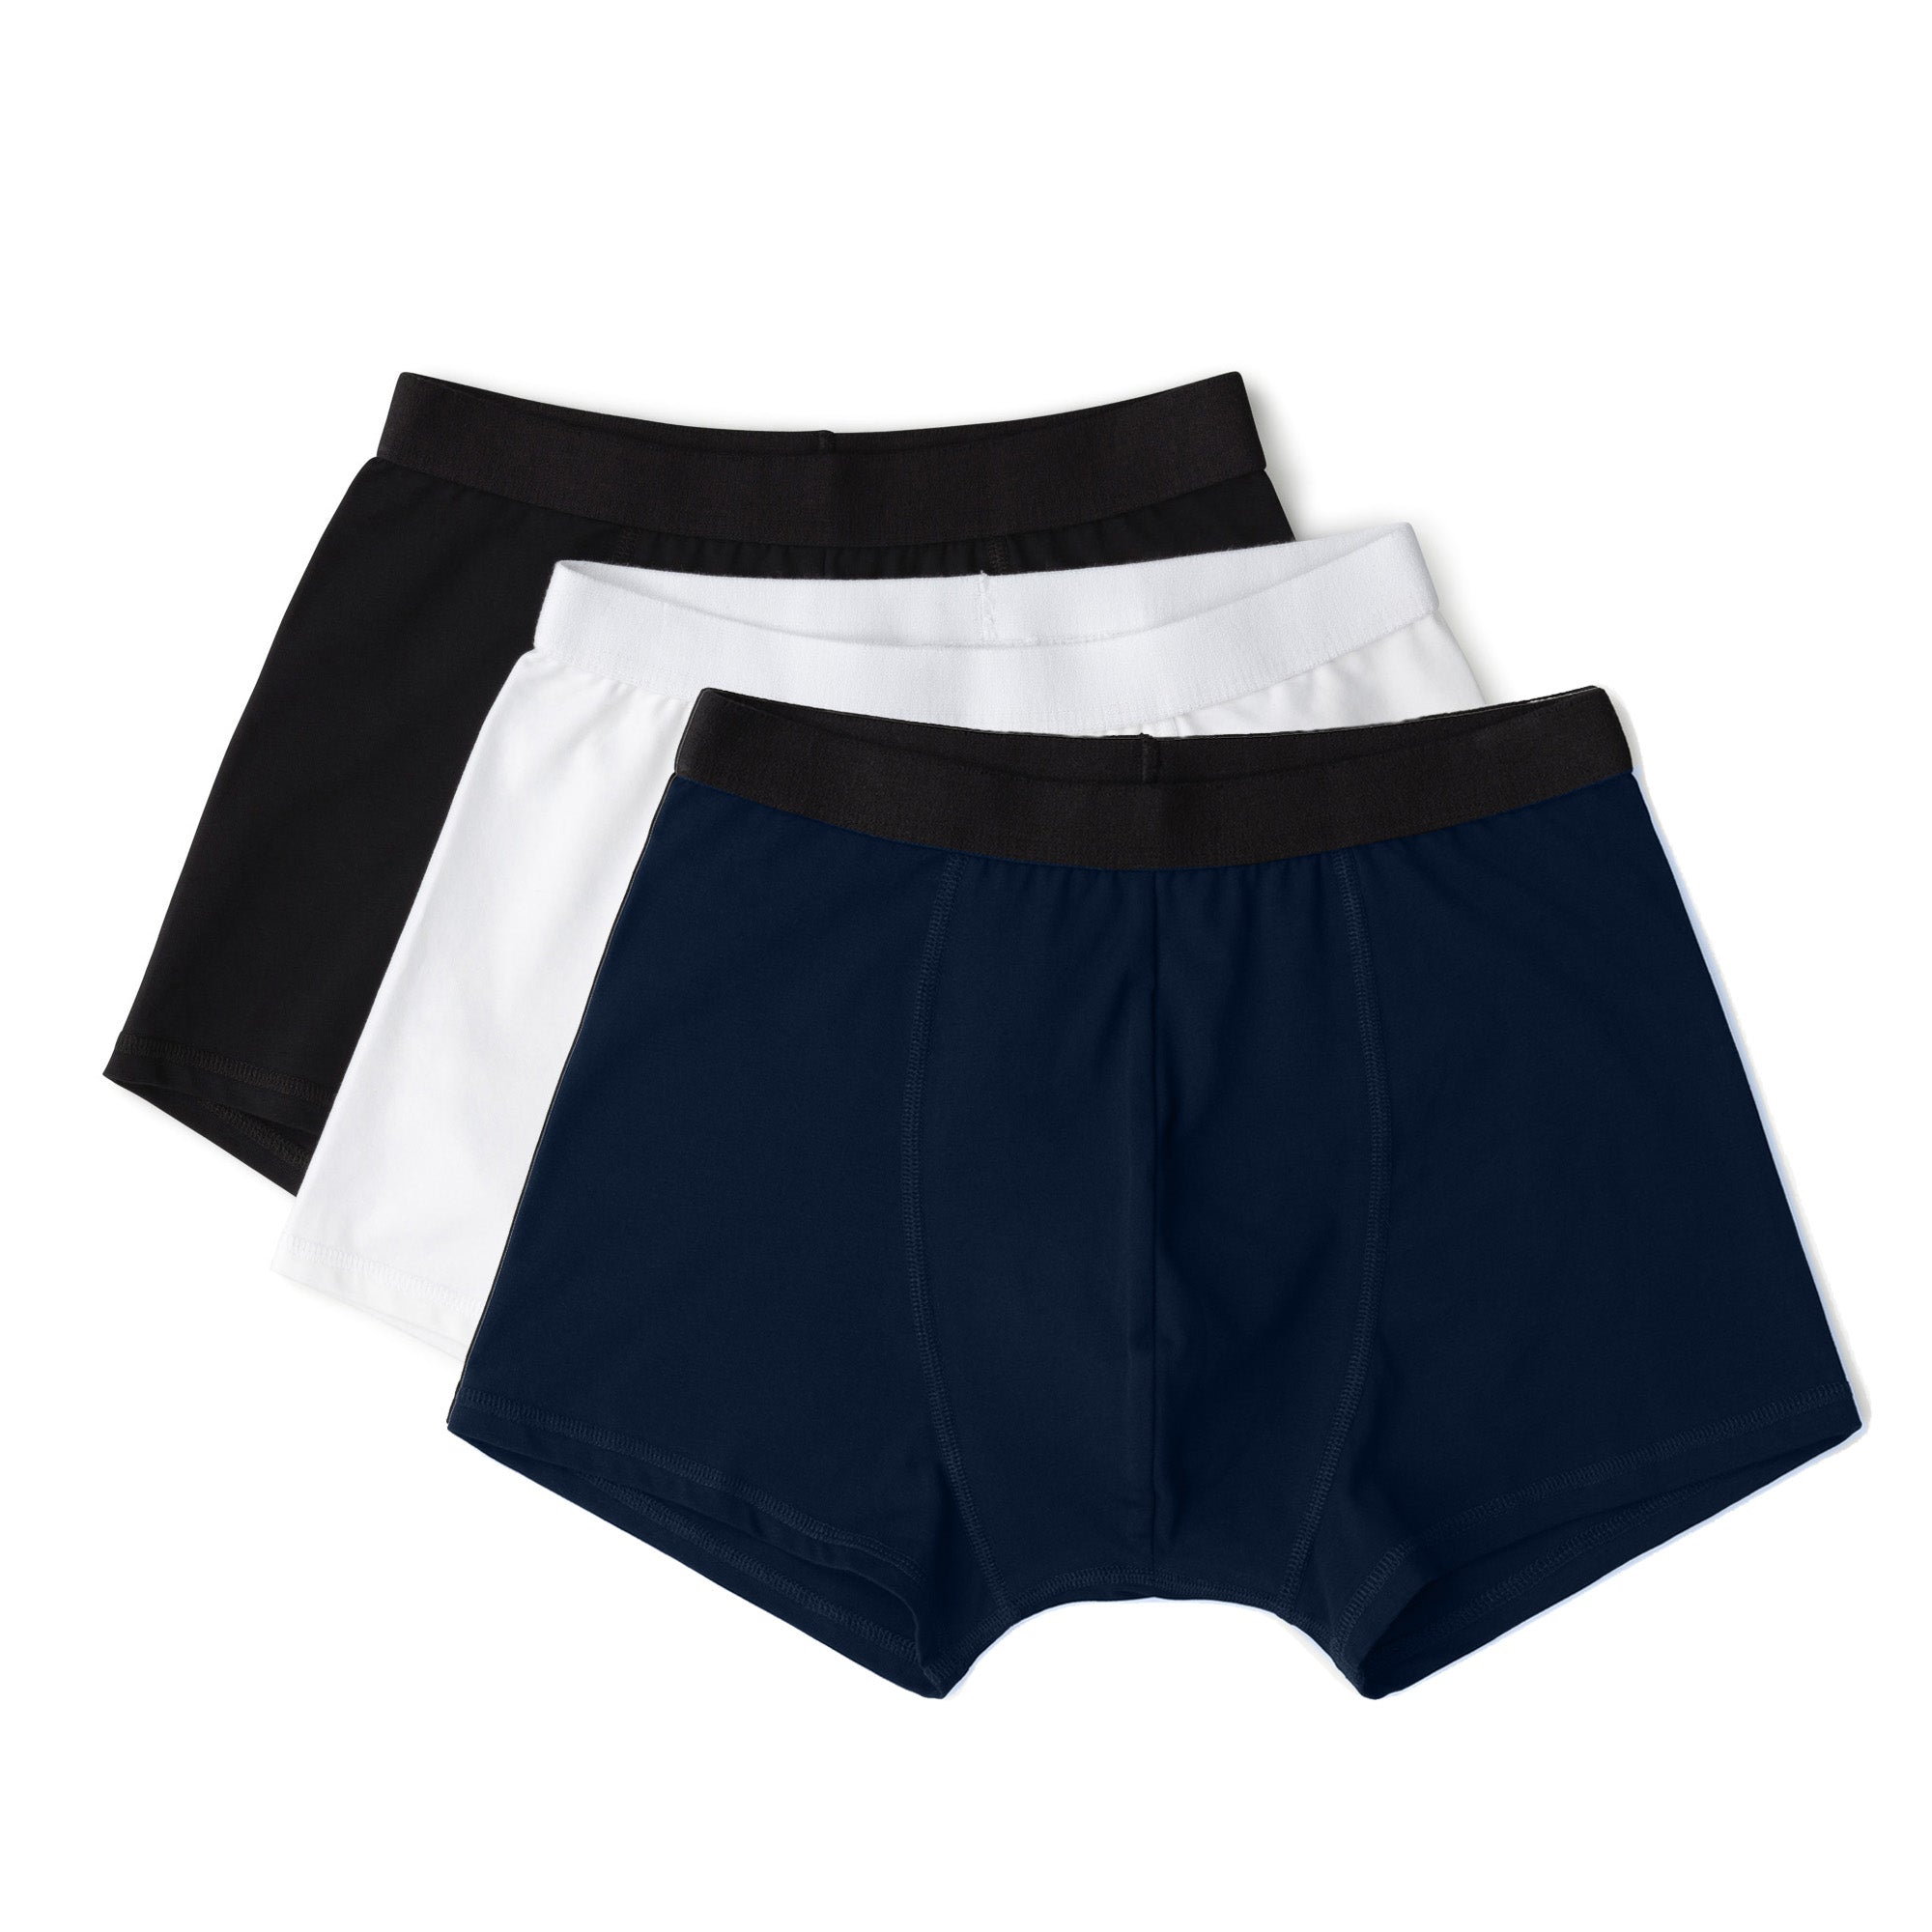 DANISH ENDURANCE 3 Pack Soft Cotton Boxer Briefs, Stretch Fit Underwear for  Men, Multicolor (1x Black, 1x Camouflage, 1x Navy Blue), XL at  Men's  Clothing store